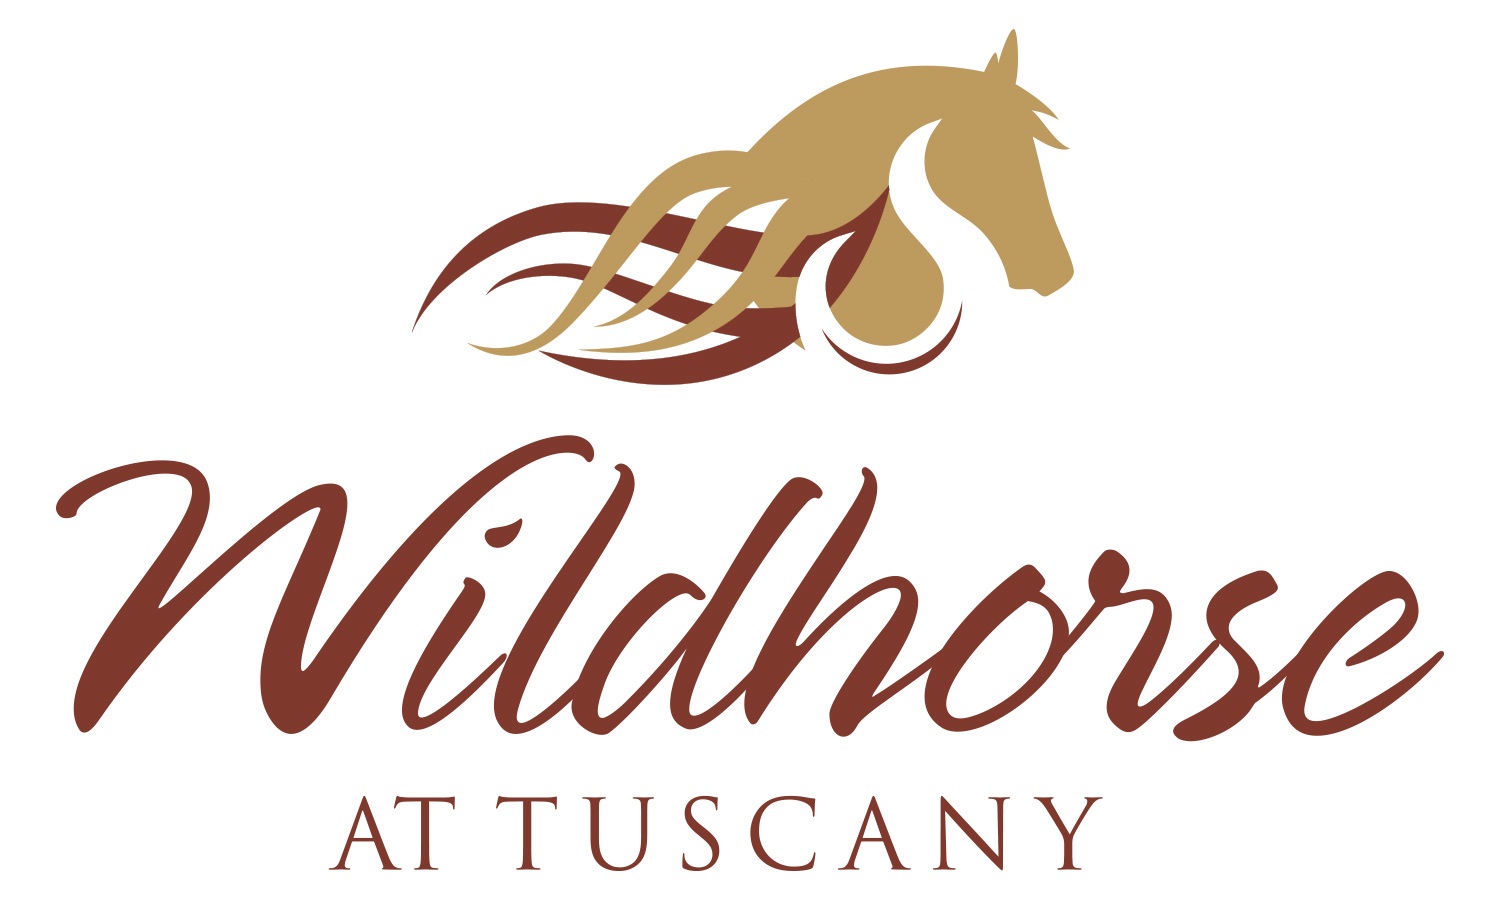 Wildhorse at Tuscany